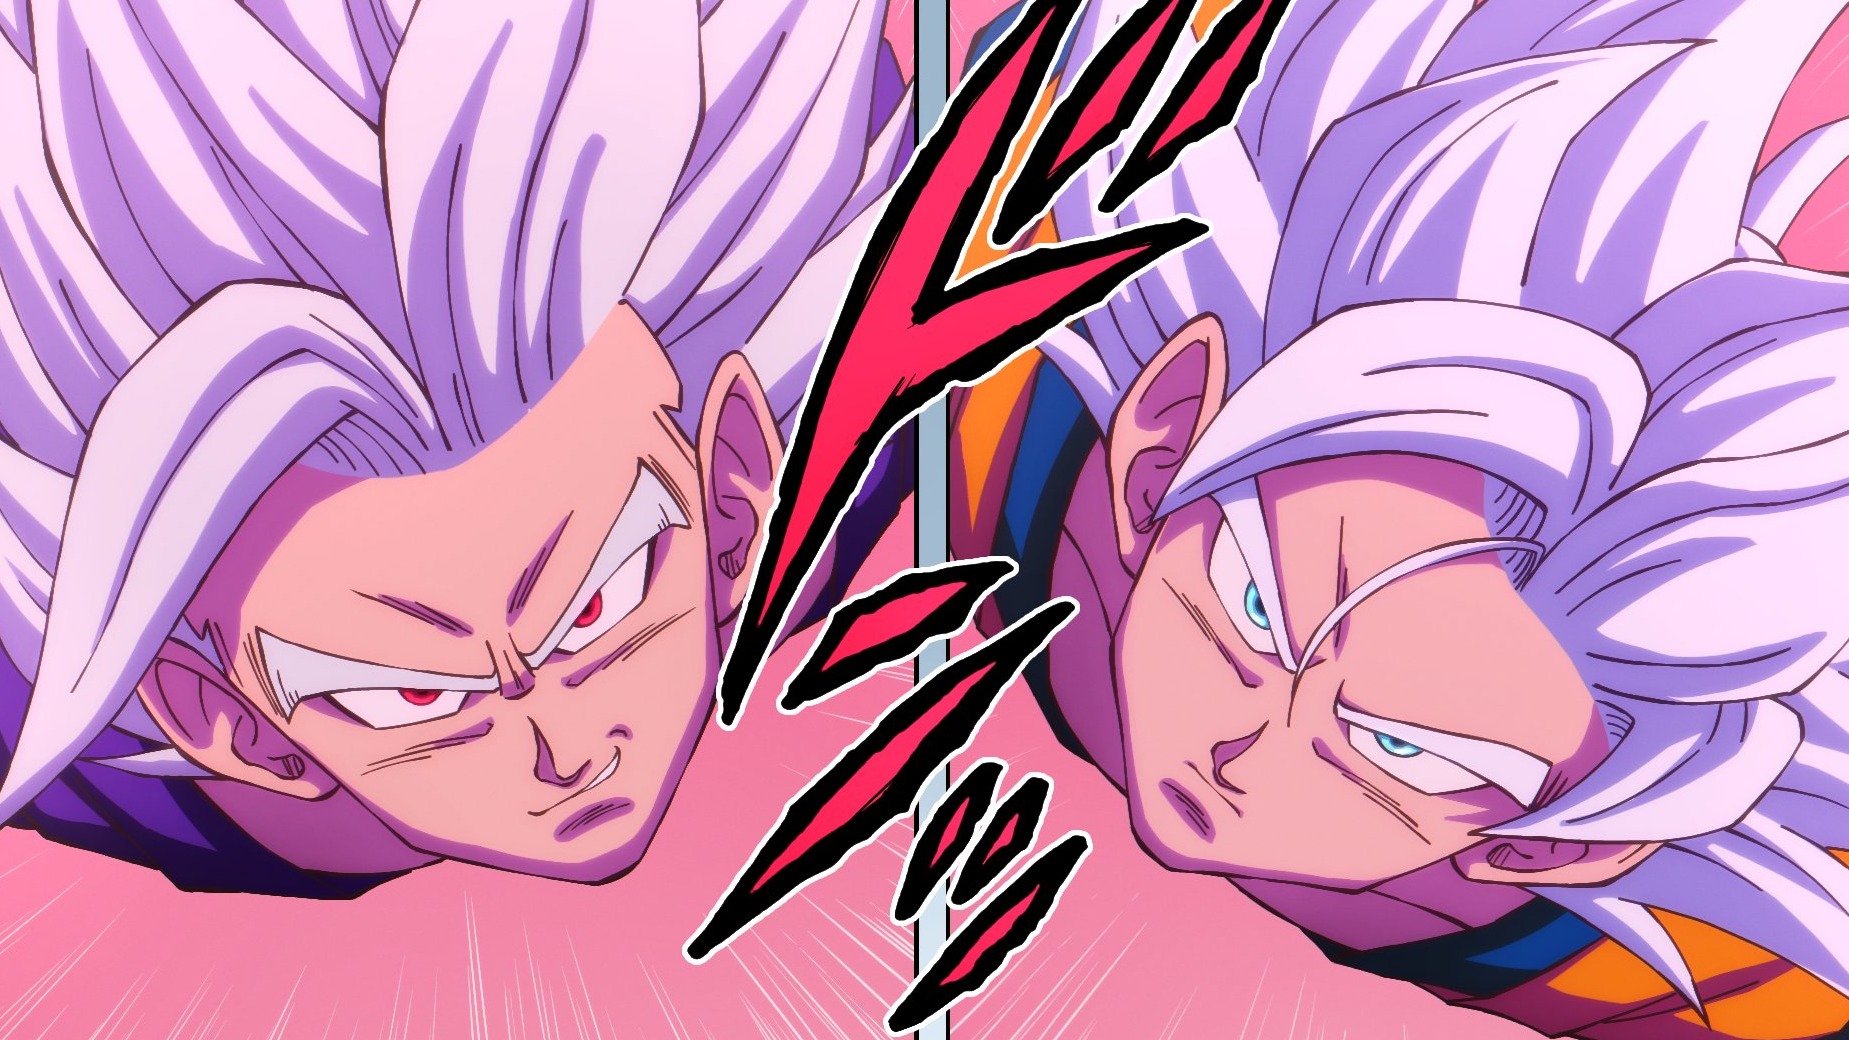 Goku vs. Gohan: Who Won the Fight in Dragon Ball Super?